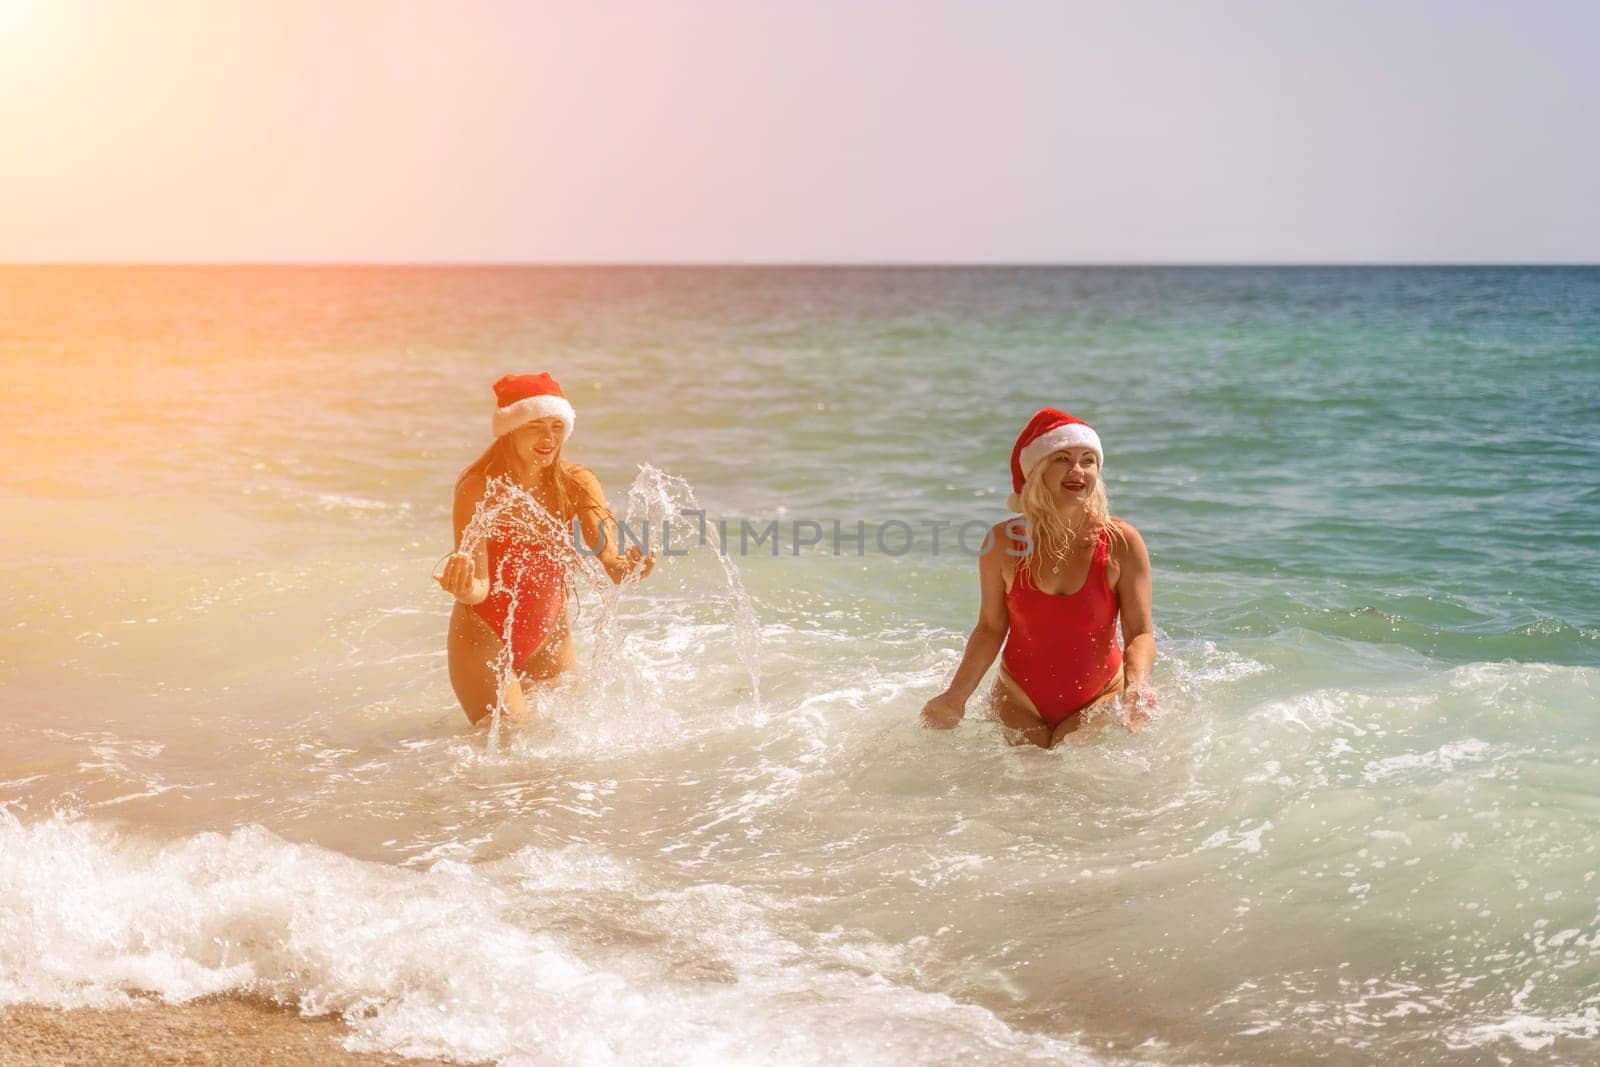 Women Santa hats ocean play. Seaside, beach daytime, enjoying beach fun. Two women in red swimsuits and Santa hats are enjoying themselves in the ocean waves. by Matiunina